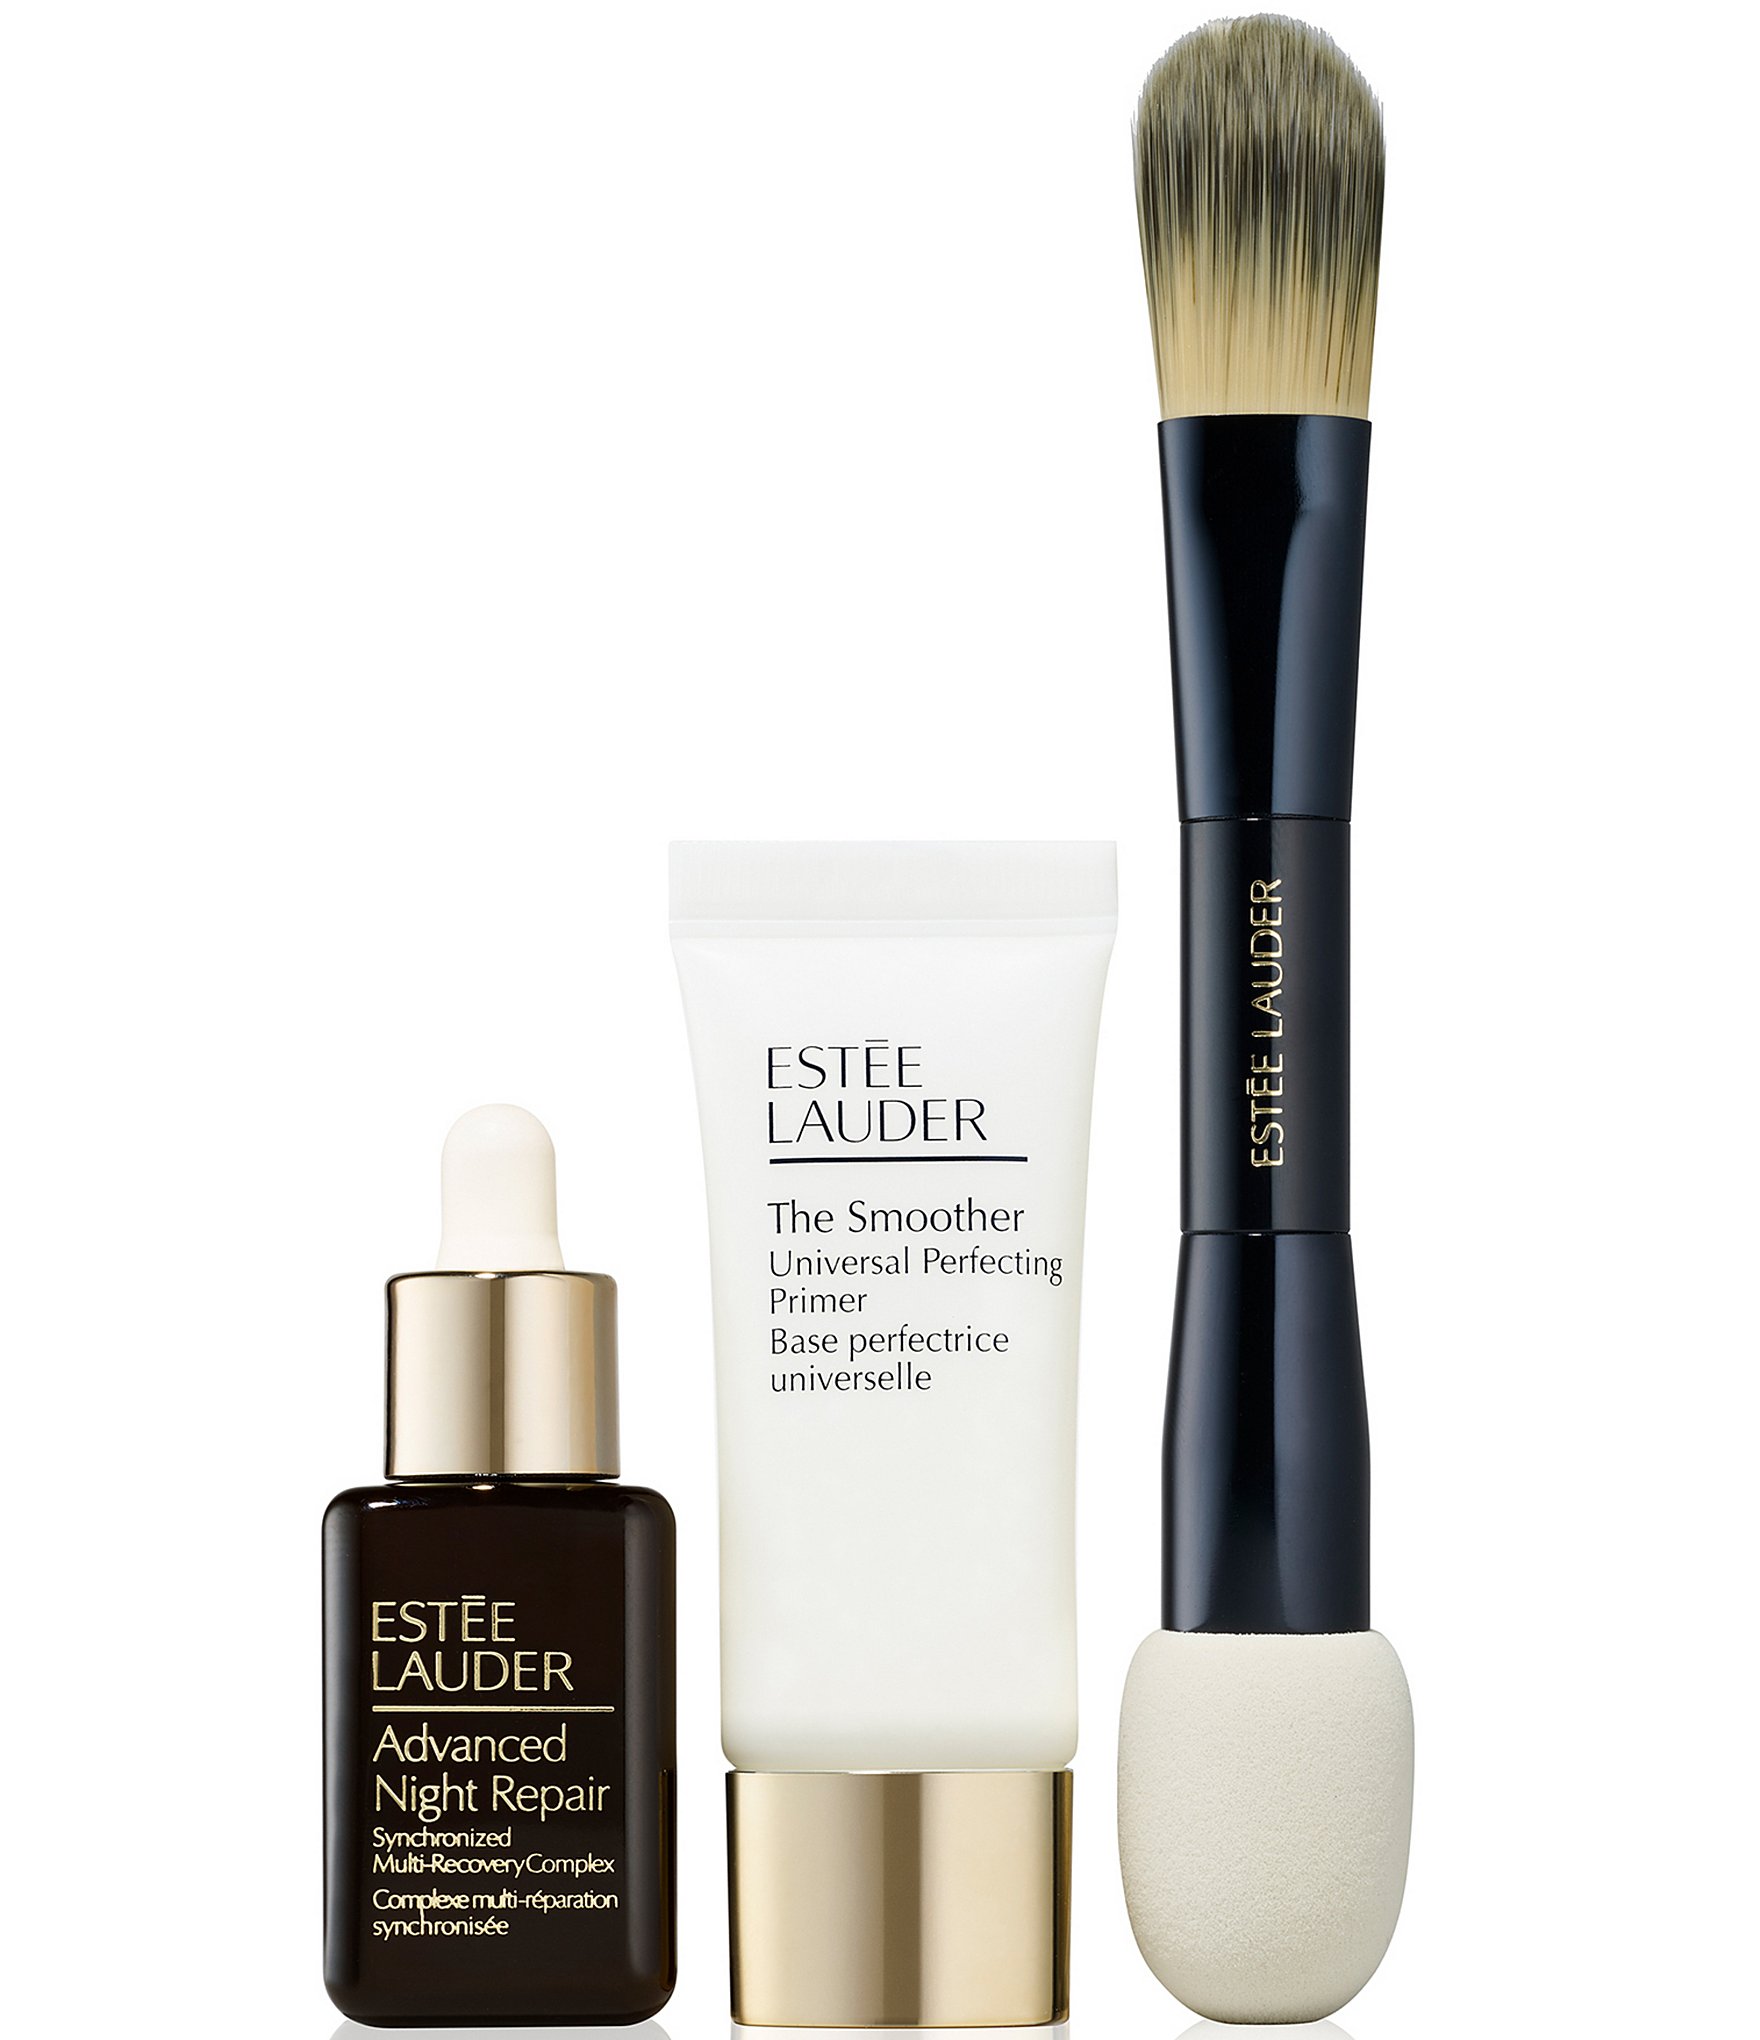 Estee Lauder Makeup Sets | Dillard's